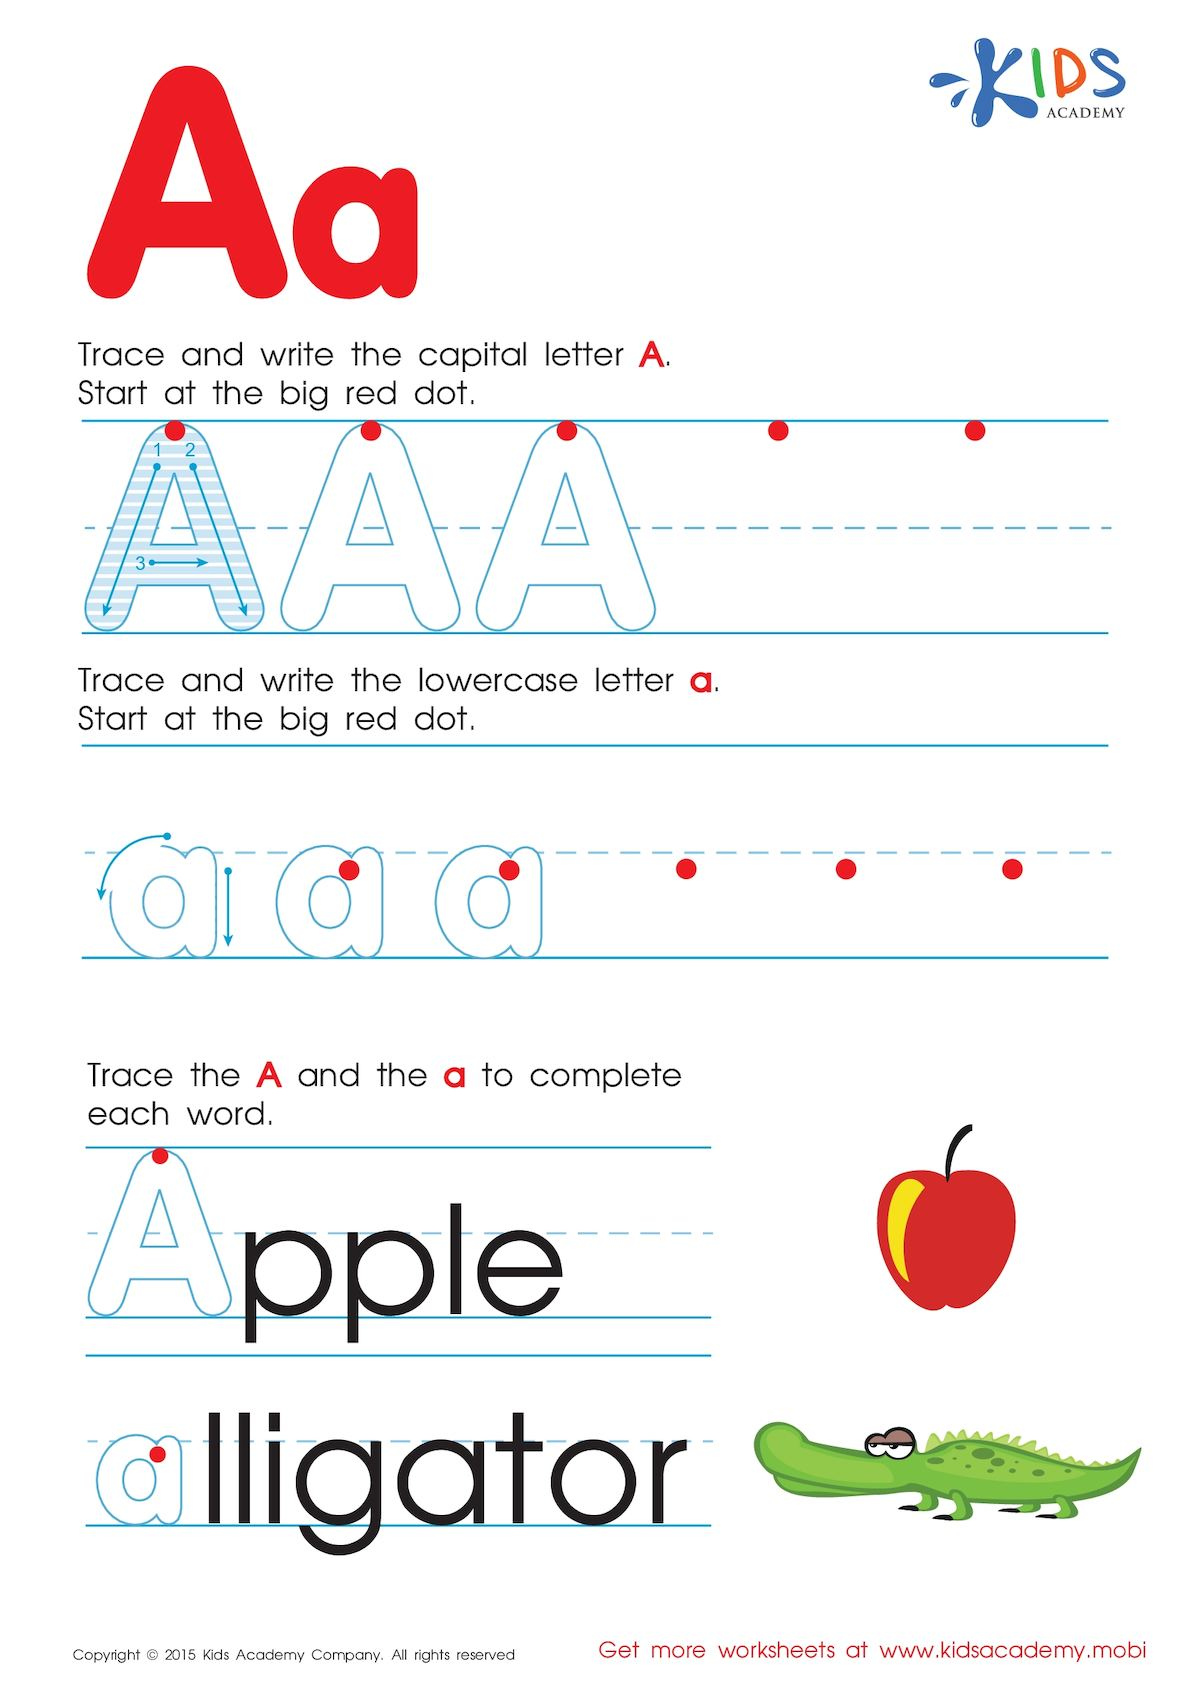 Calam o Free Alphabet Worksheets For Kids A Z